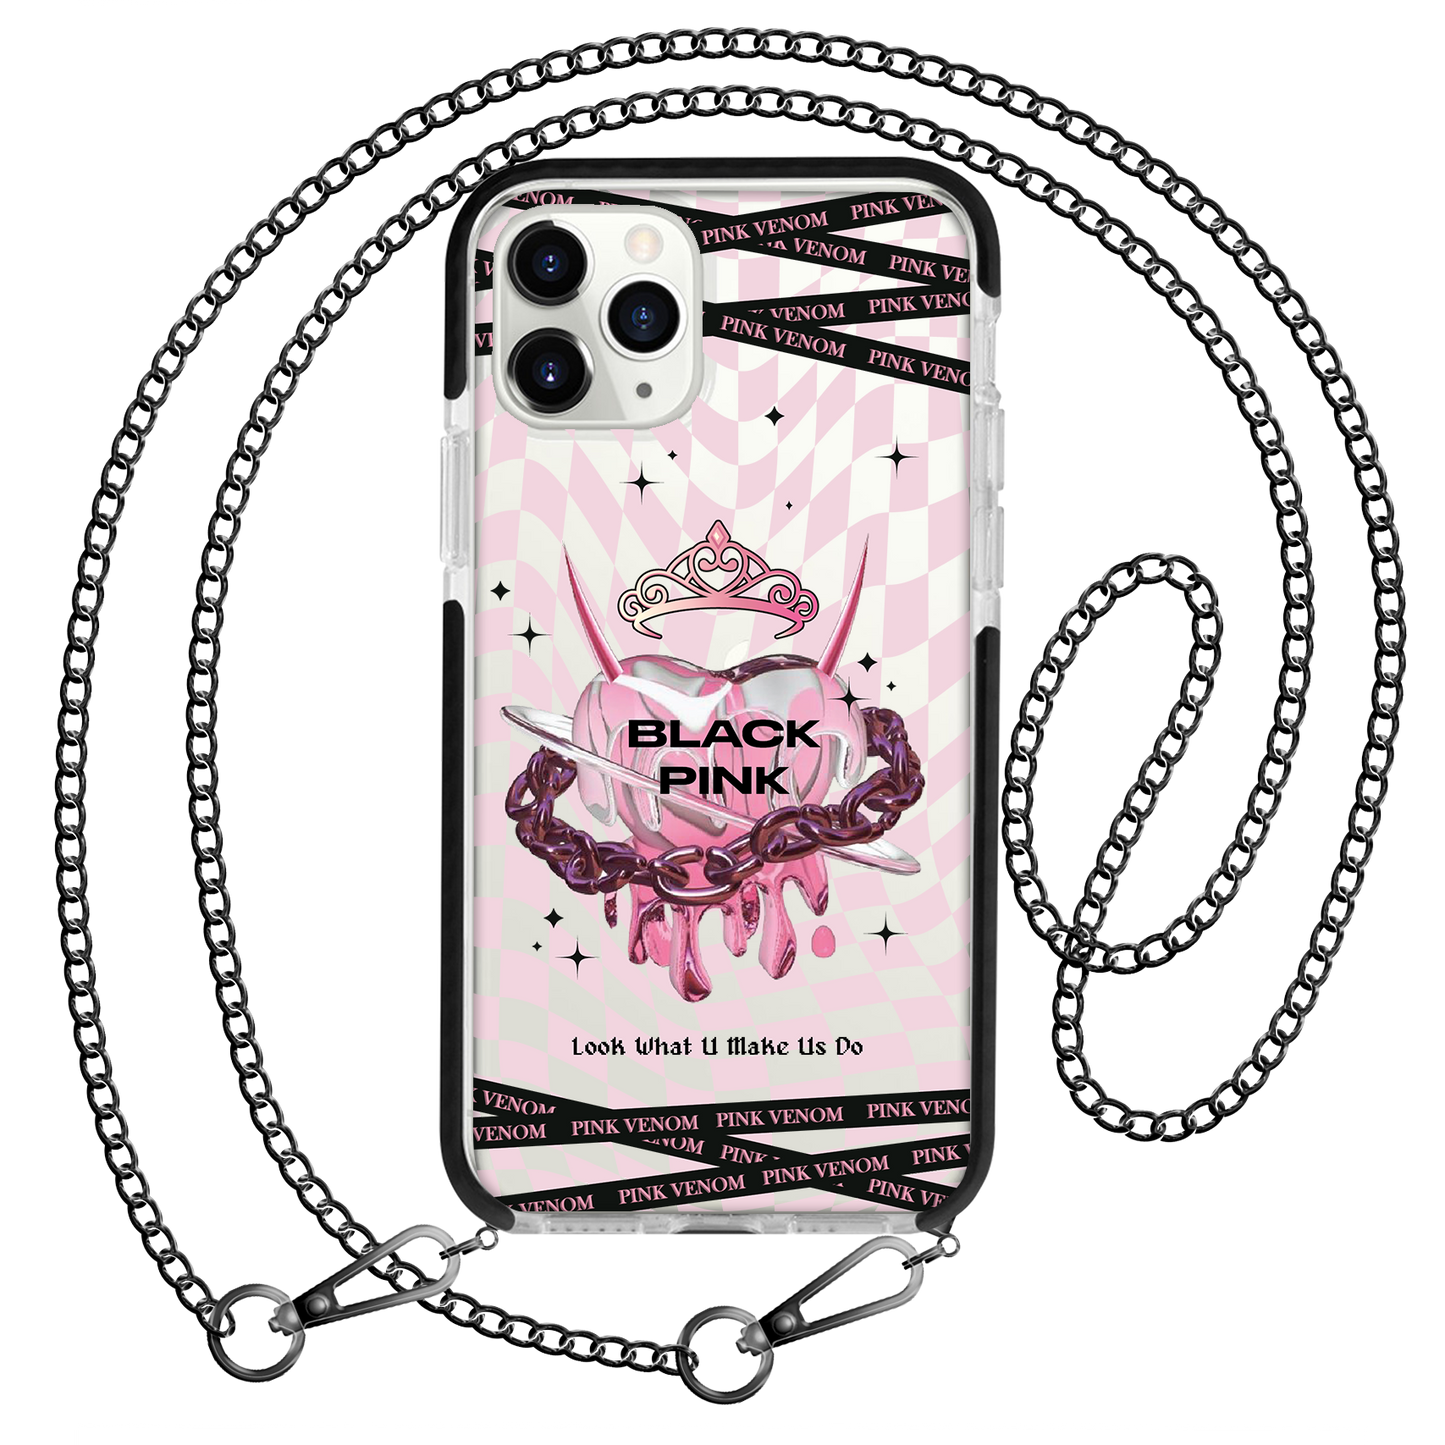 iPhone - It's Blackpink